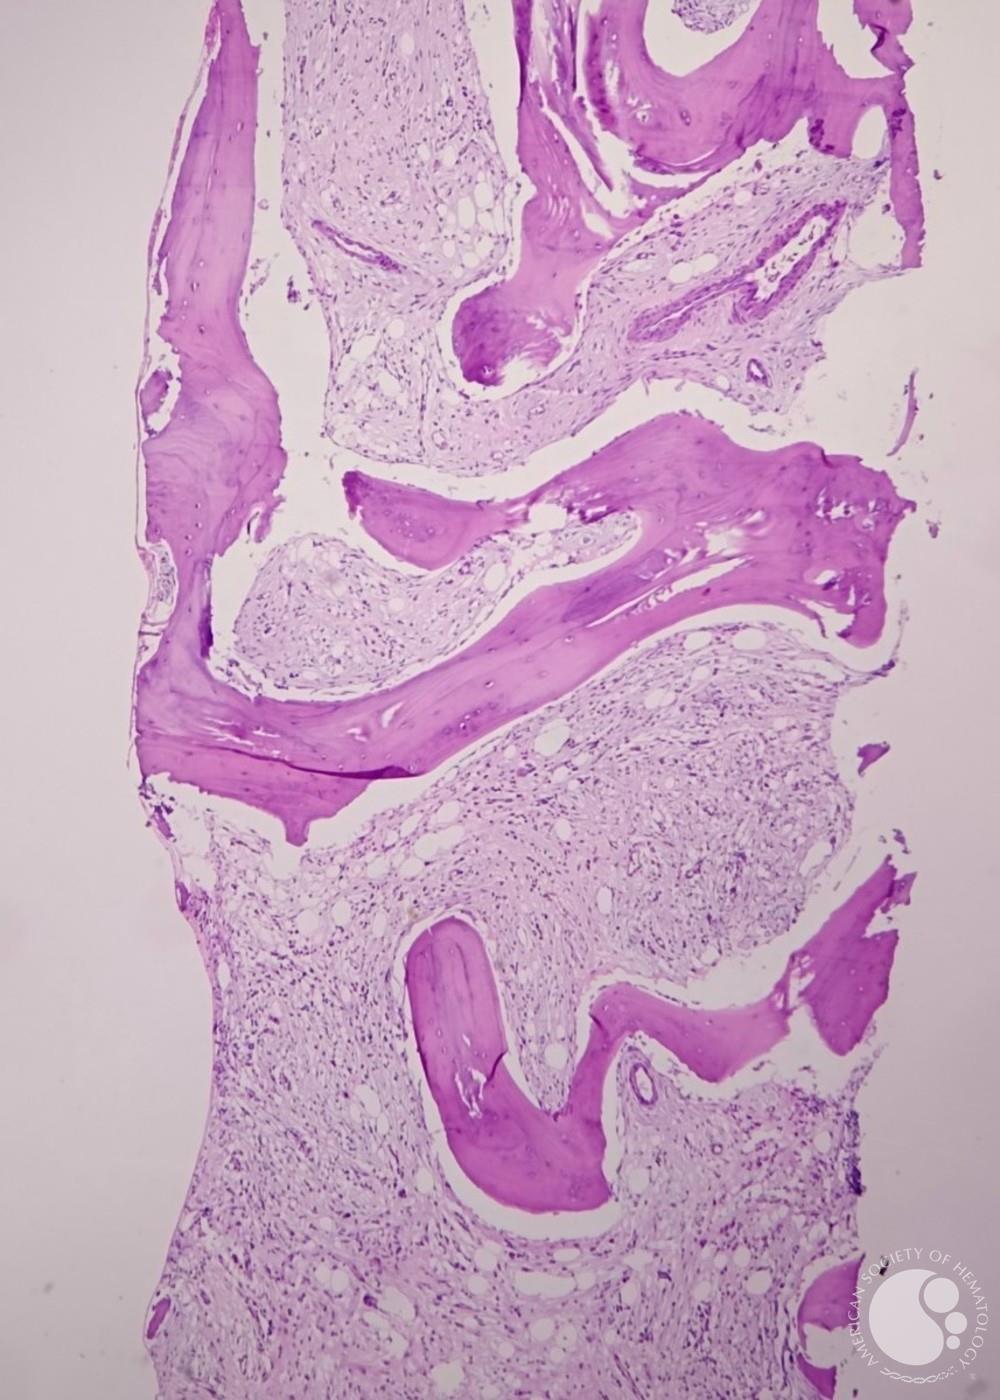 Bone marrow biopsy showing dense fibrosis